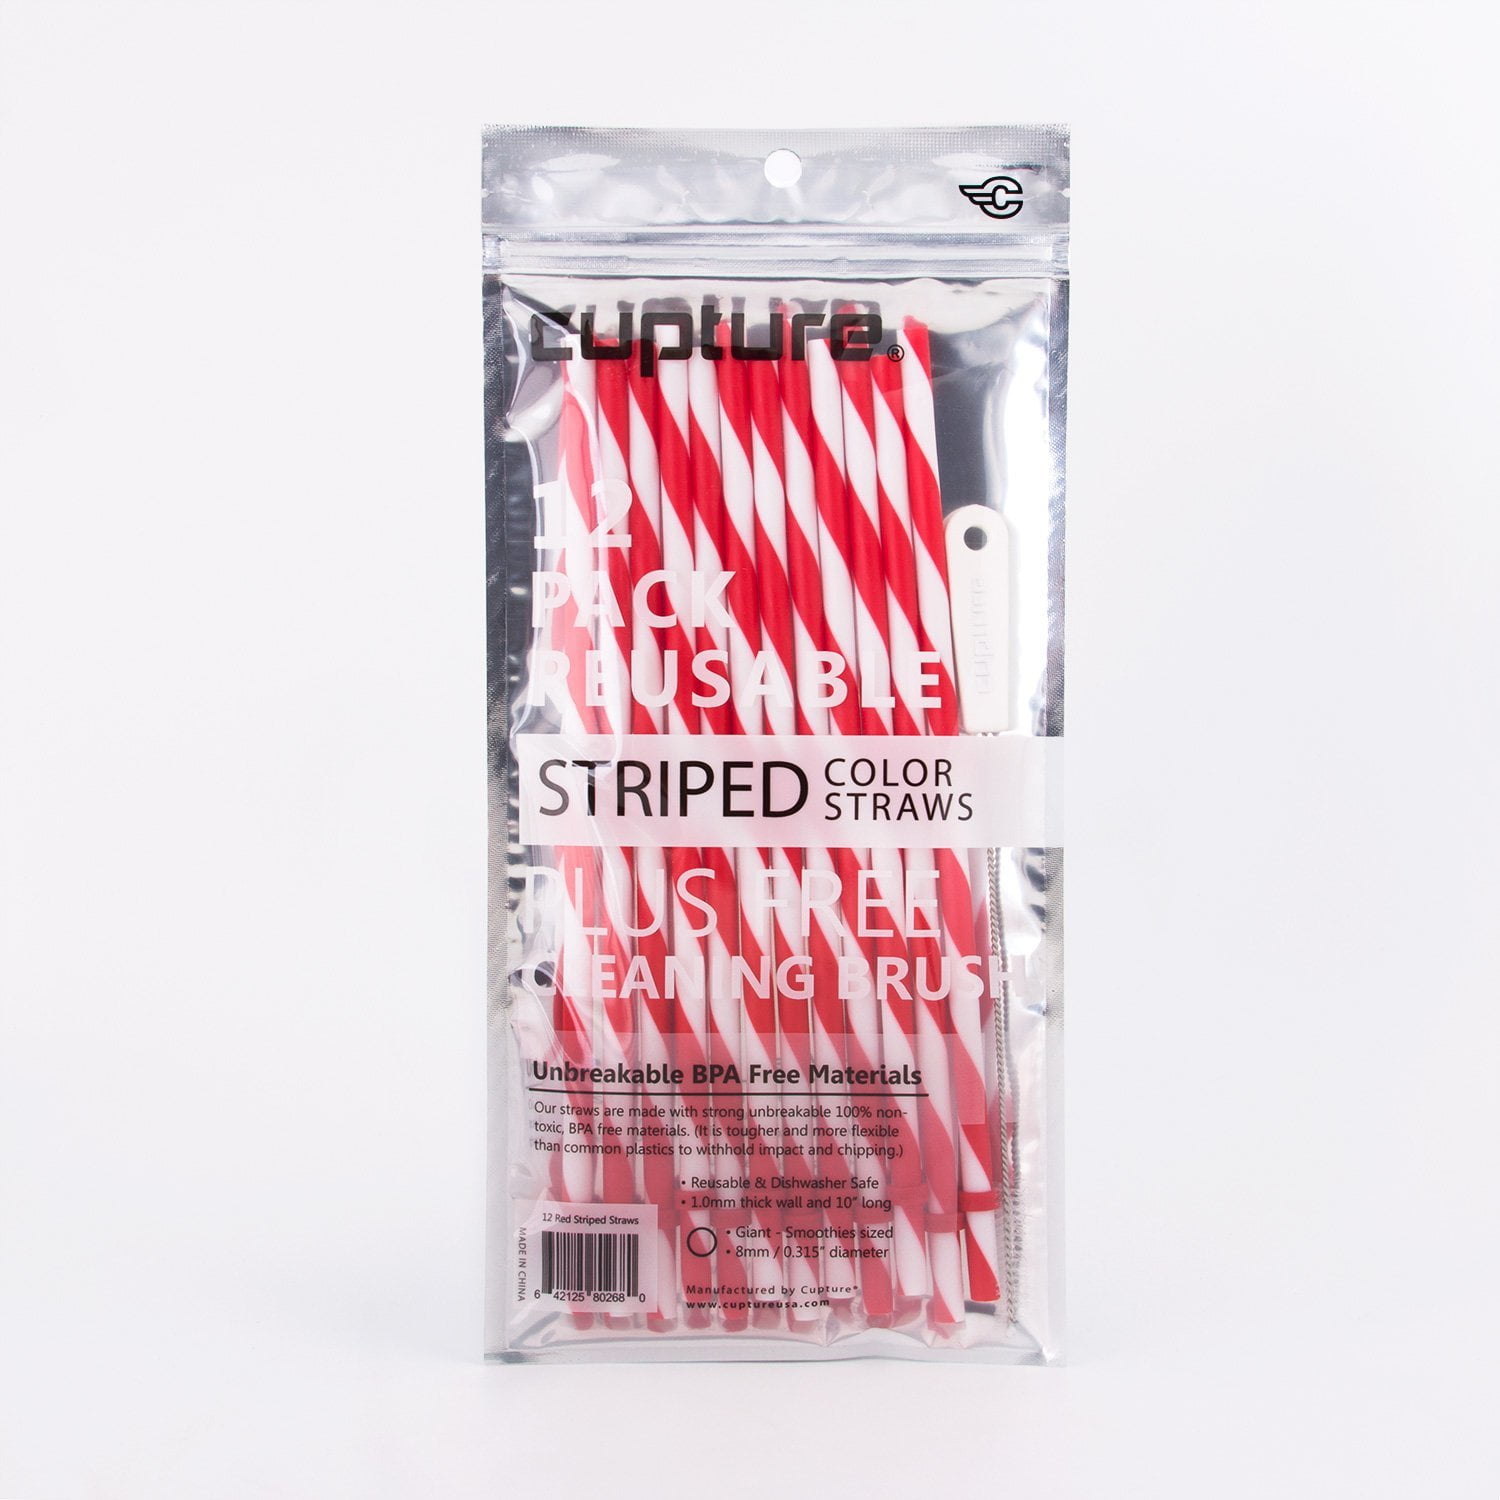 Reusable Glass Straw – SHOP Cooper Hewitt